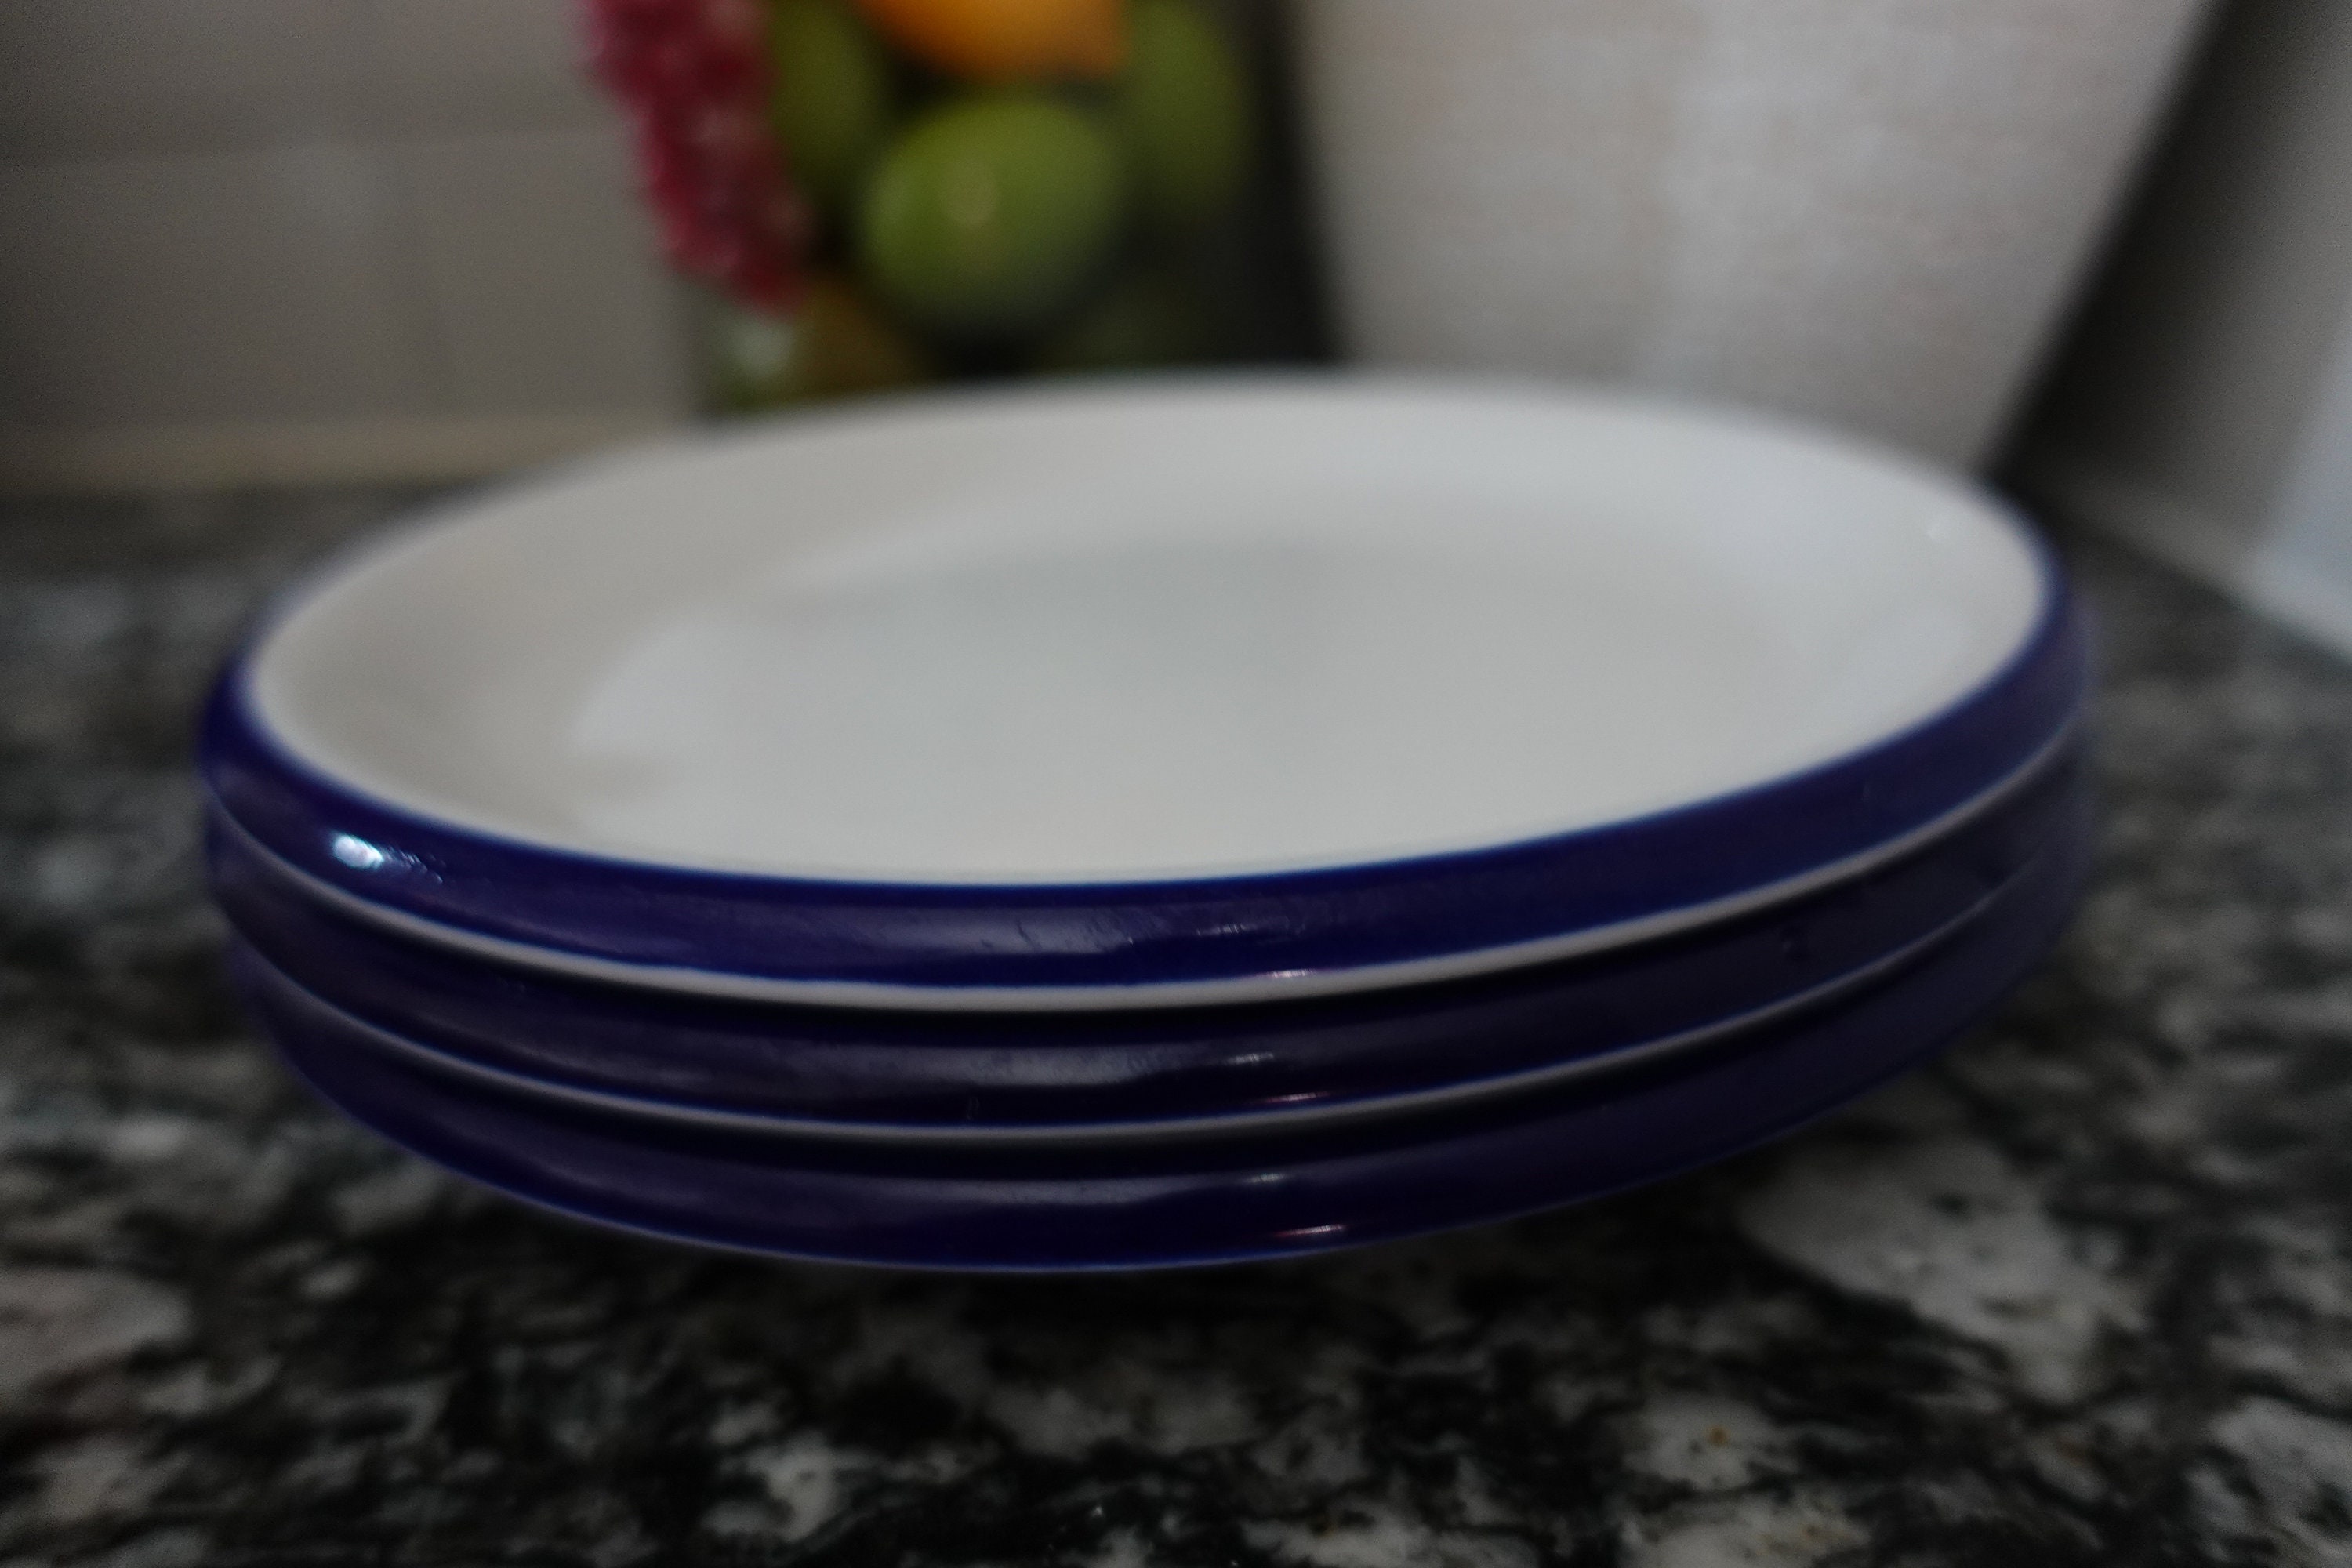 Vintage Enamel Plates, Set of 3, White Enameled Plate With Blue